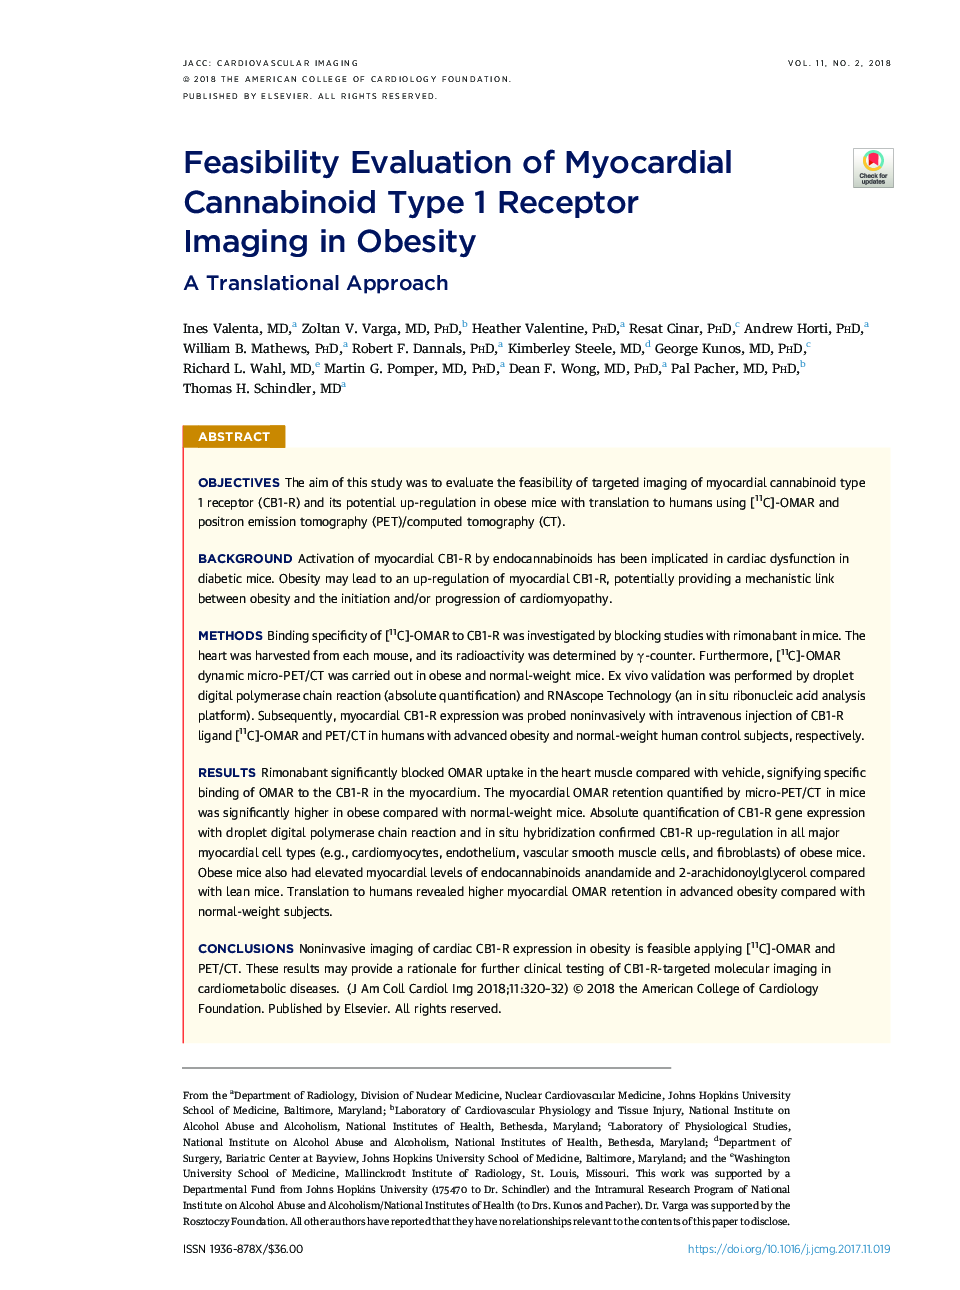 Feasibility Evaluation of Myocardial Cannabinoid Type 1 Receptor ImagingÂ inÂ Obesity